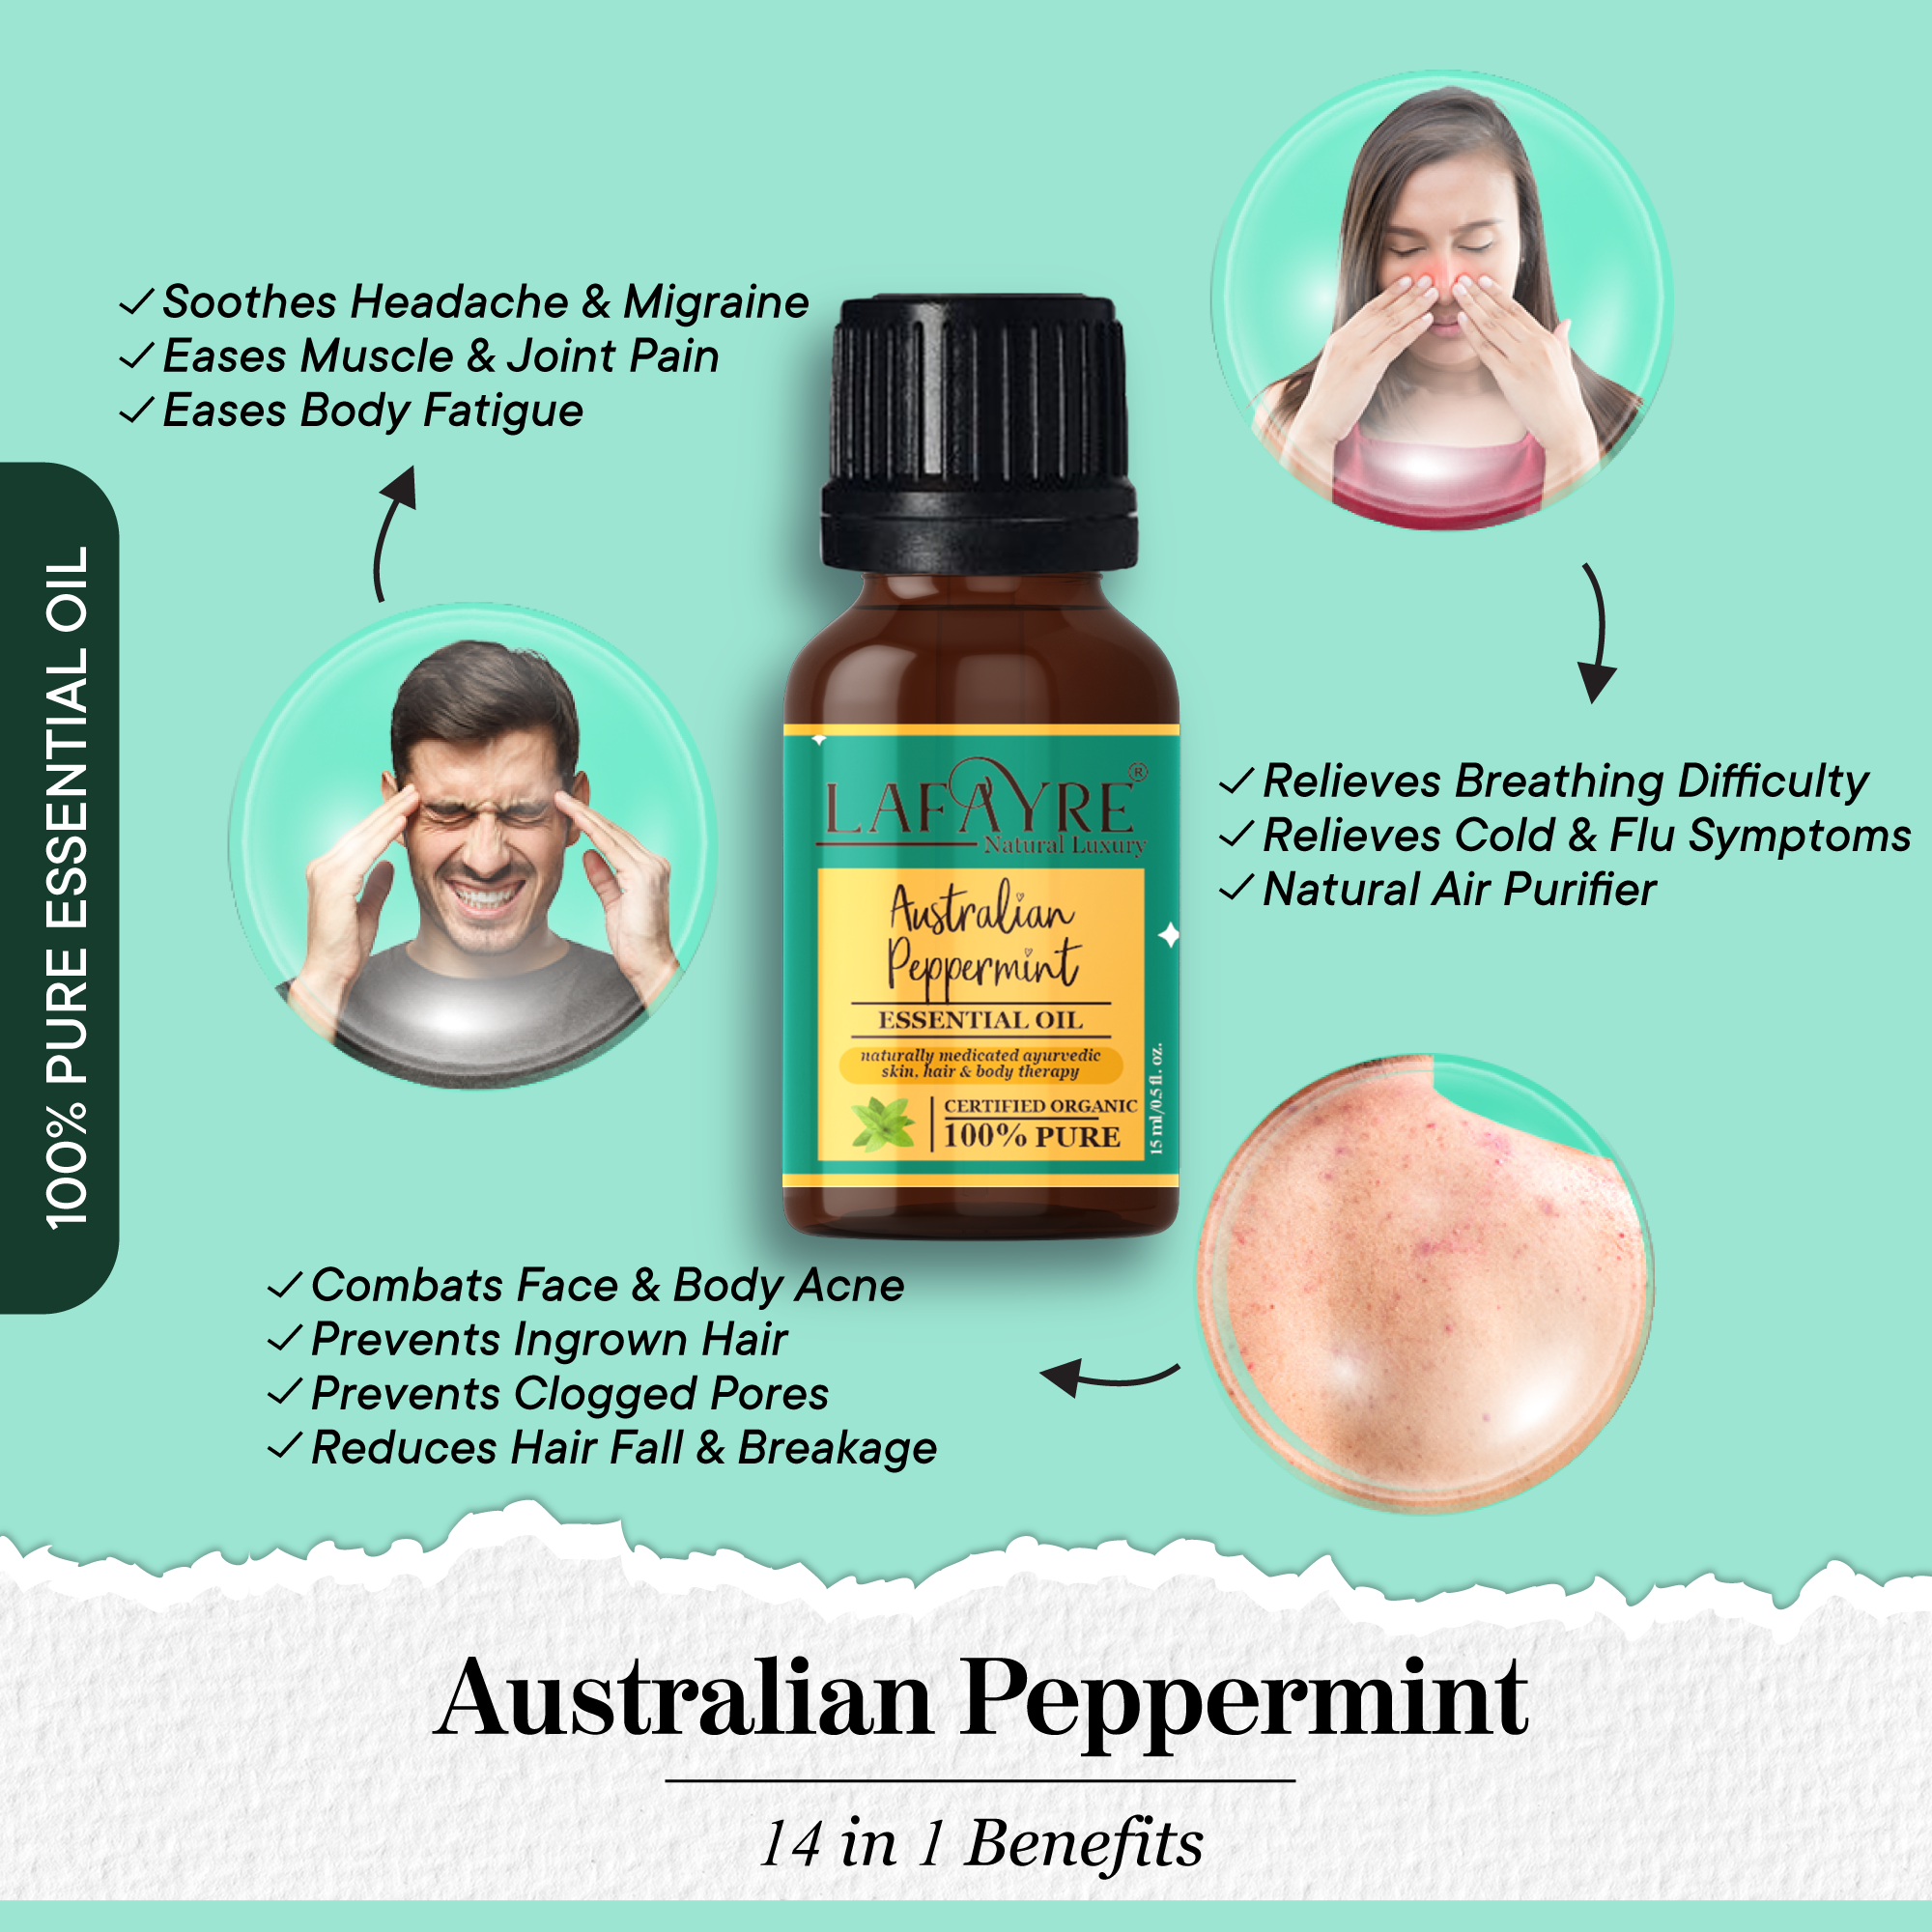 Australian Peppermint Oil benefits